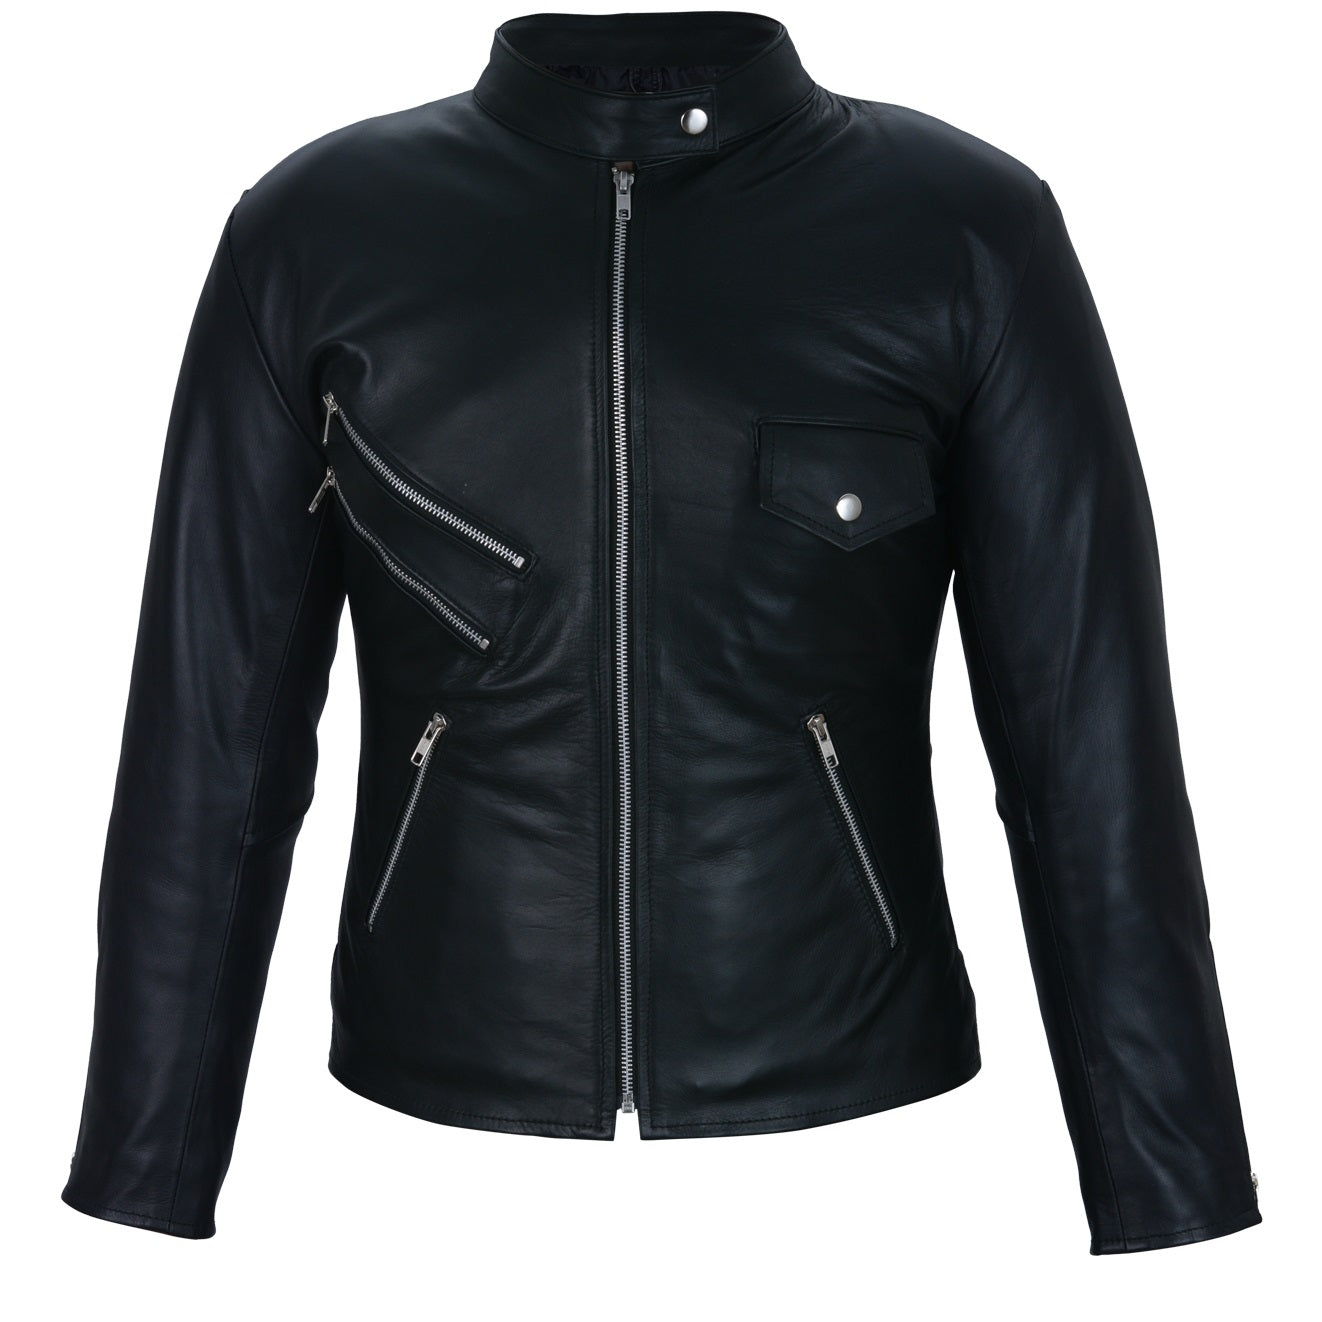 Black Leather Jacket Women - Black Zip Up Zipper Multi Pocket Jacket Womens